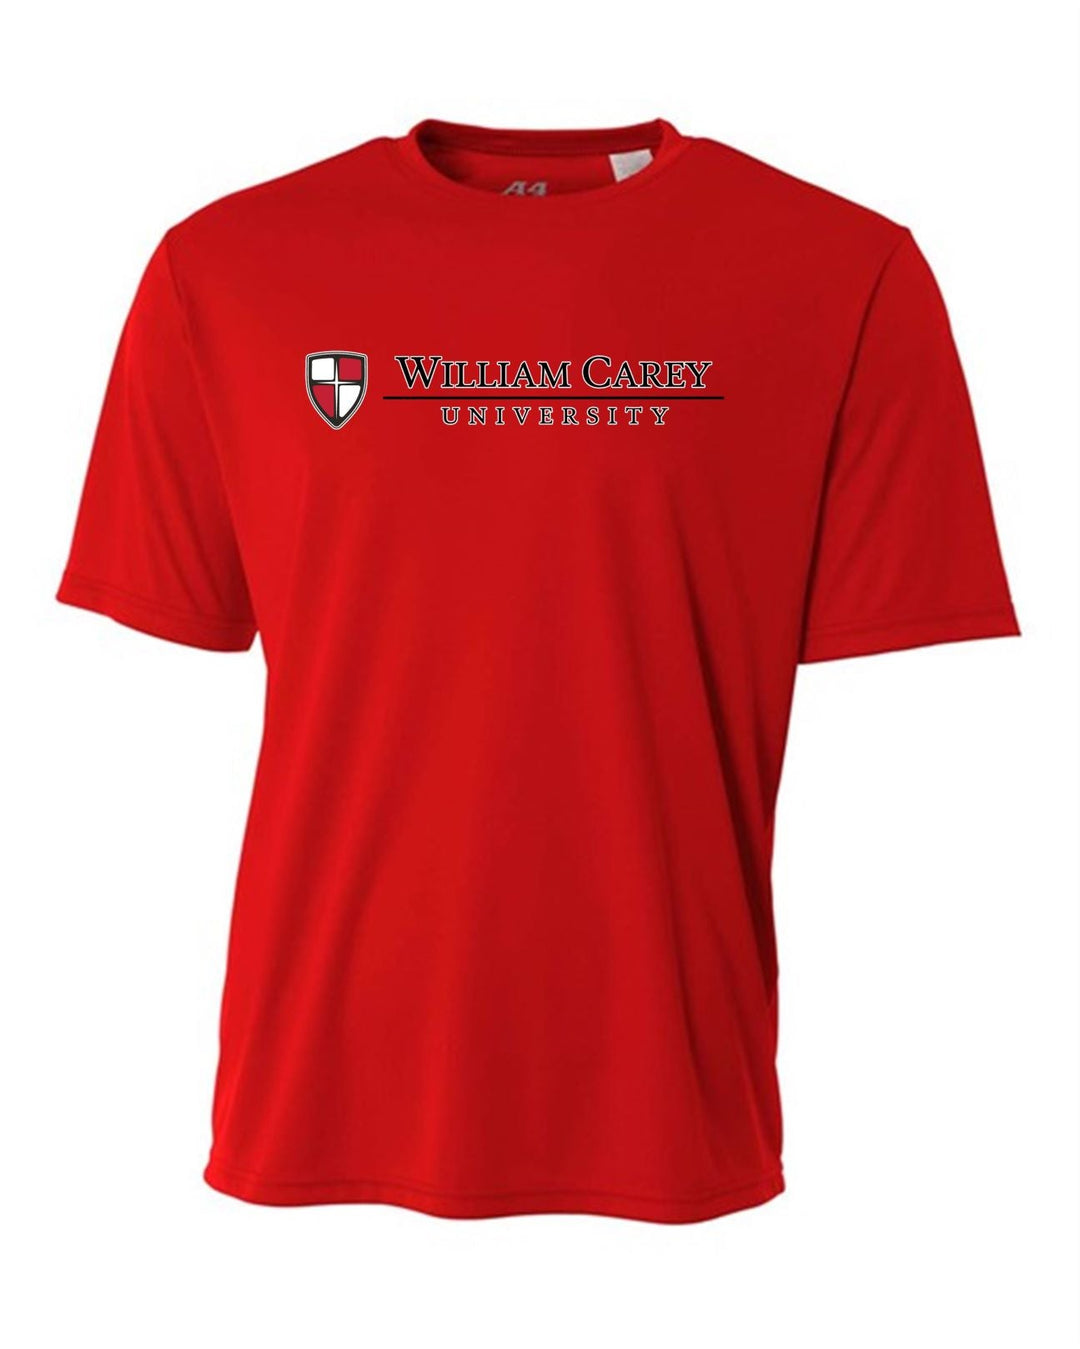 WCU School Of Nursing Youth Short-Sleeve Performance Shirt WCU Nursing Red Youth Small - Third Coast Soccer